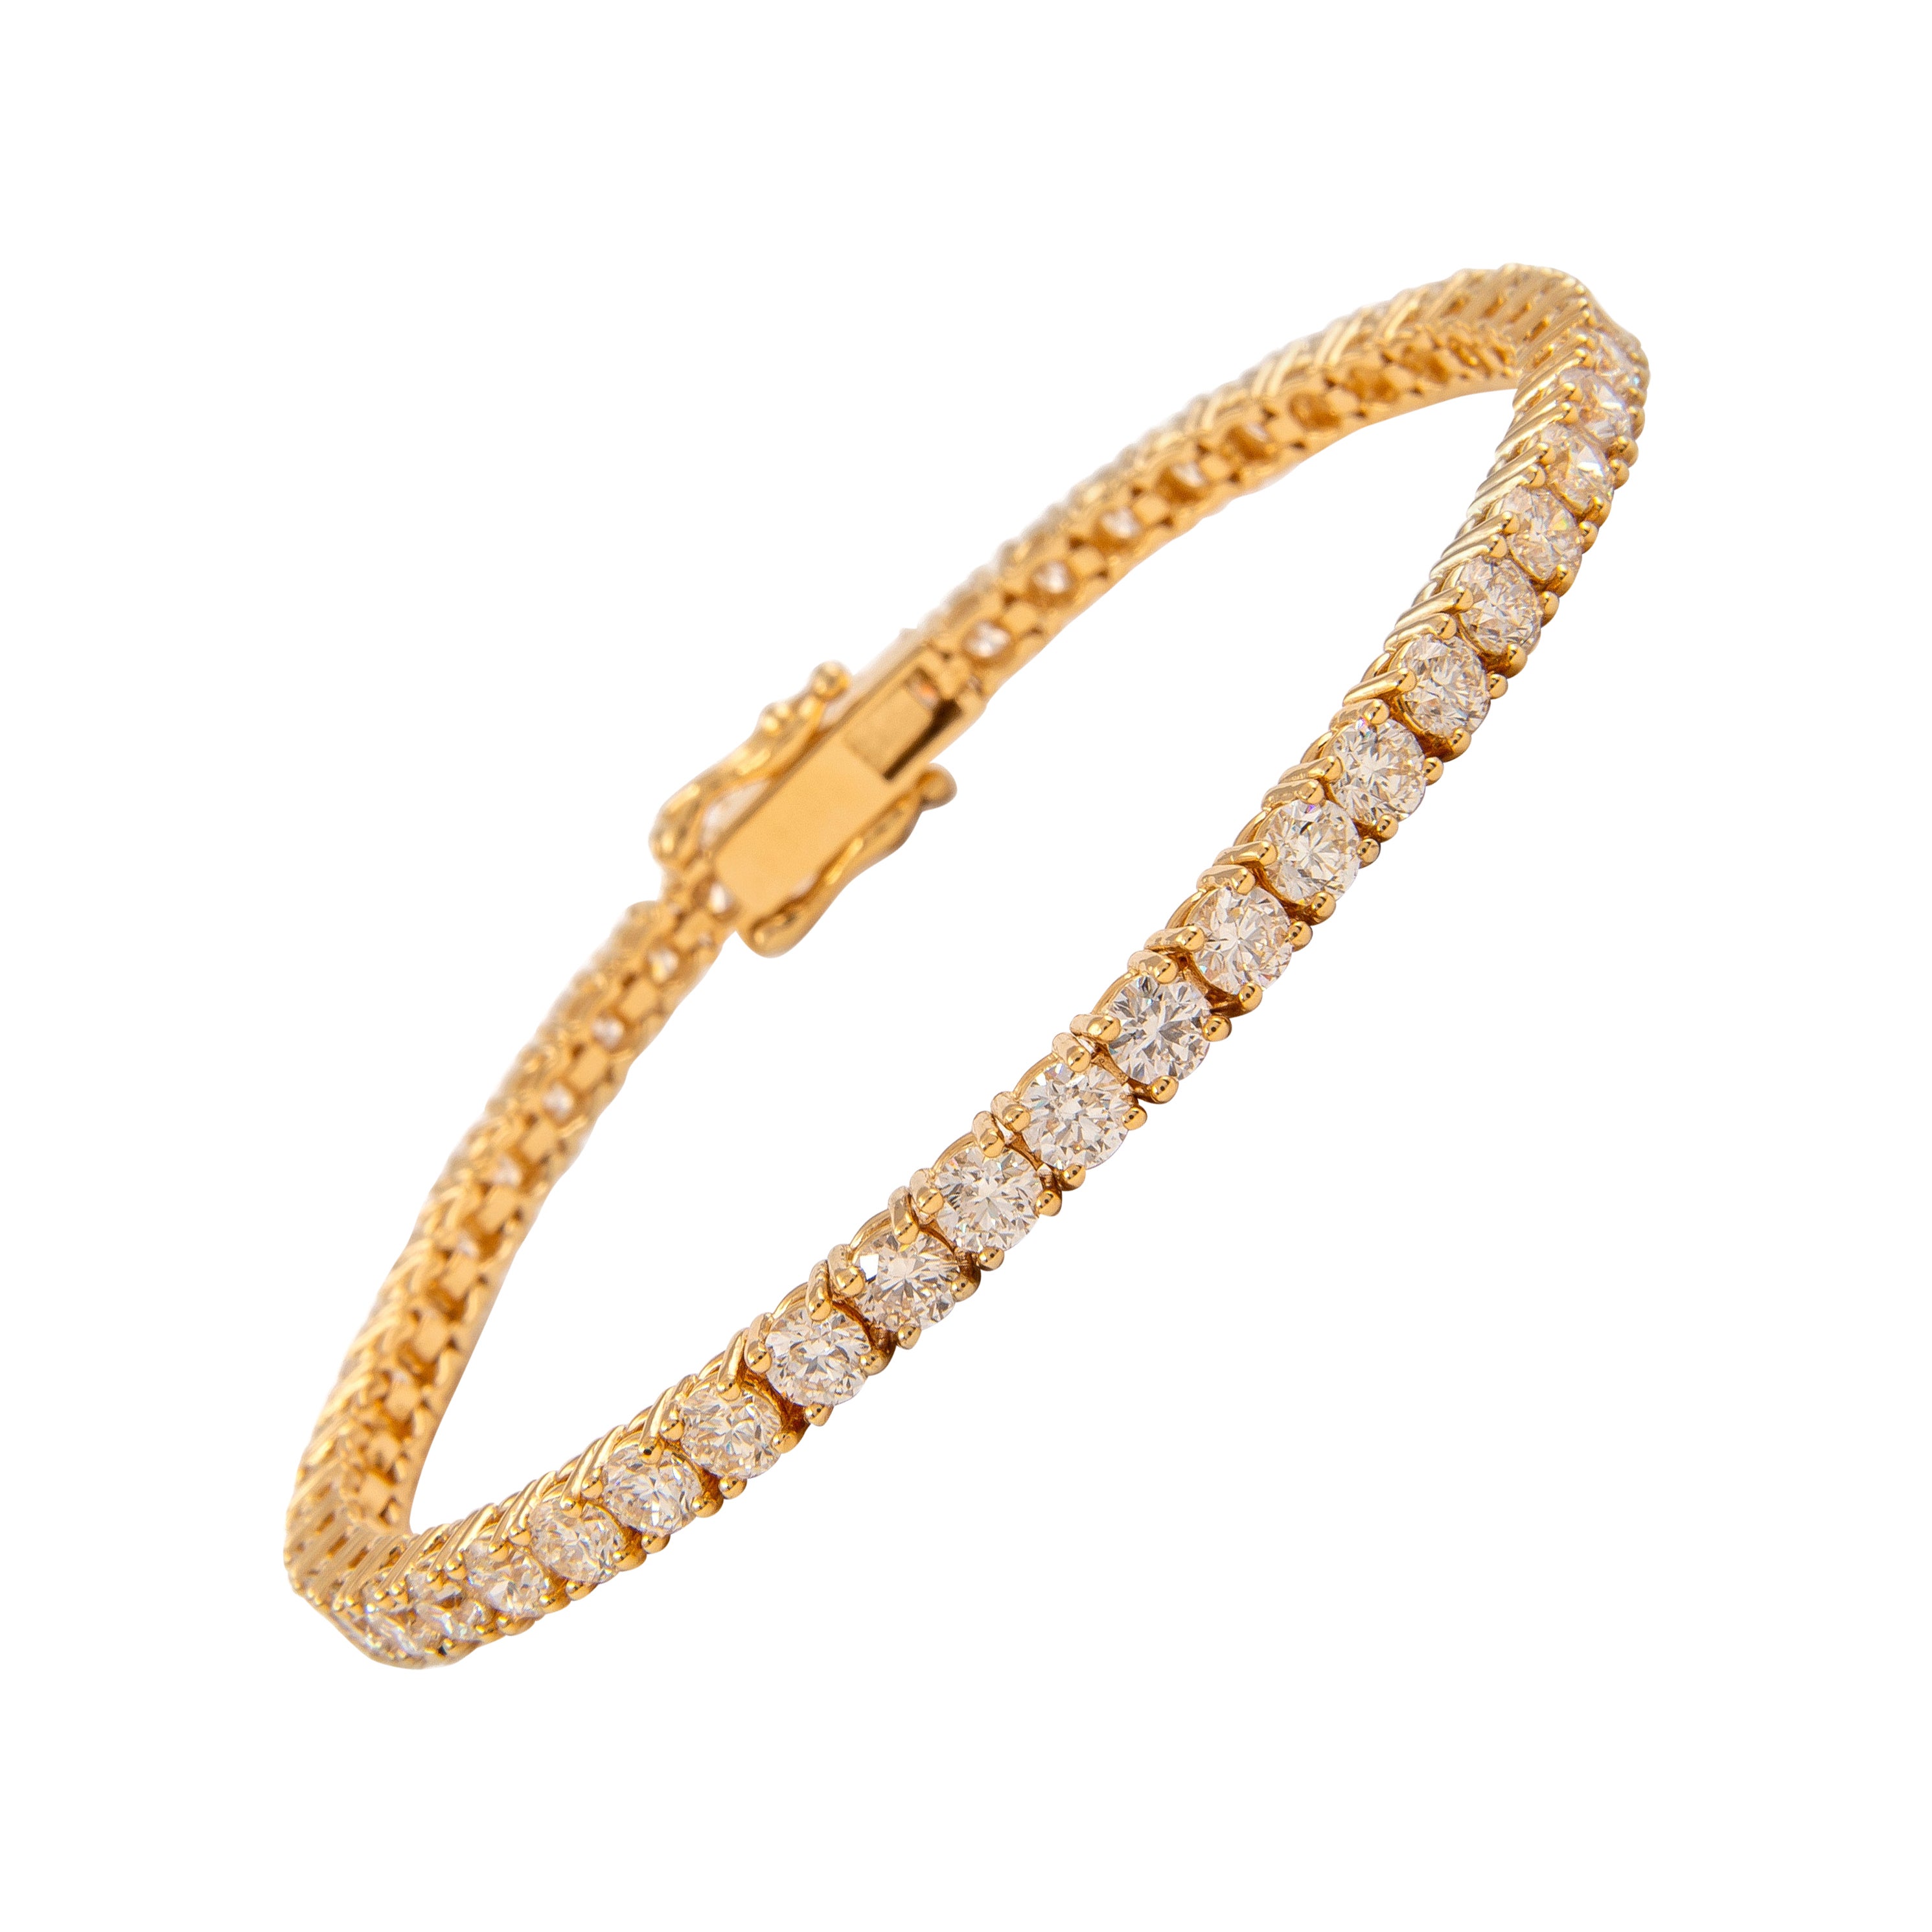 Alexander 8.78 Carats Diamond Tennis Bracelet 18-Karat Yellow Gold